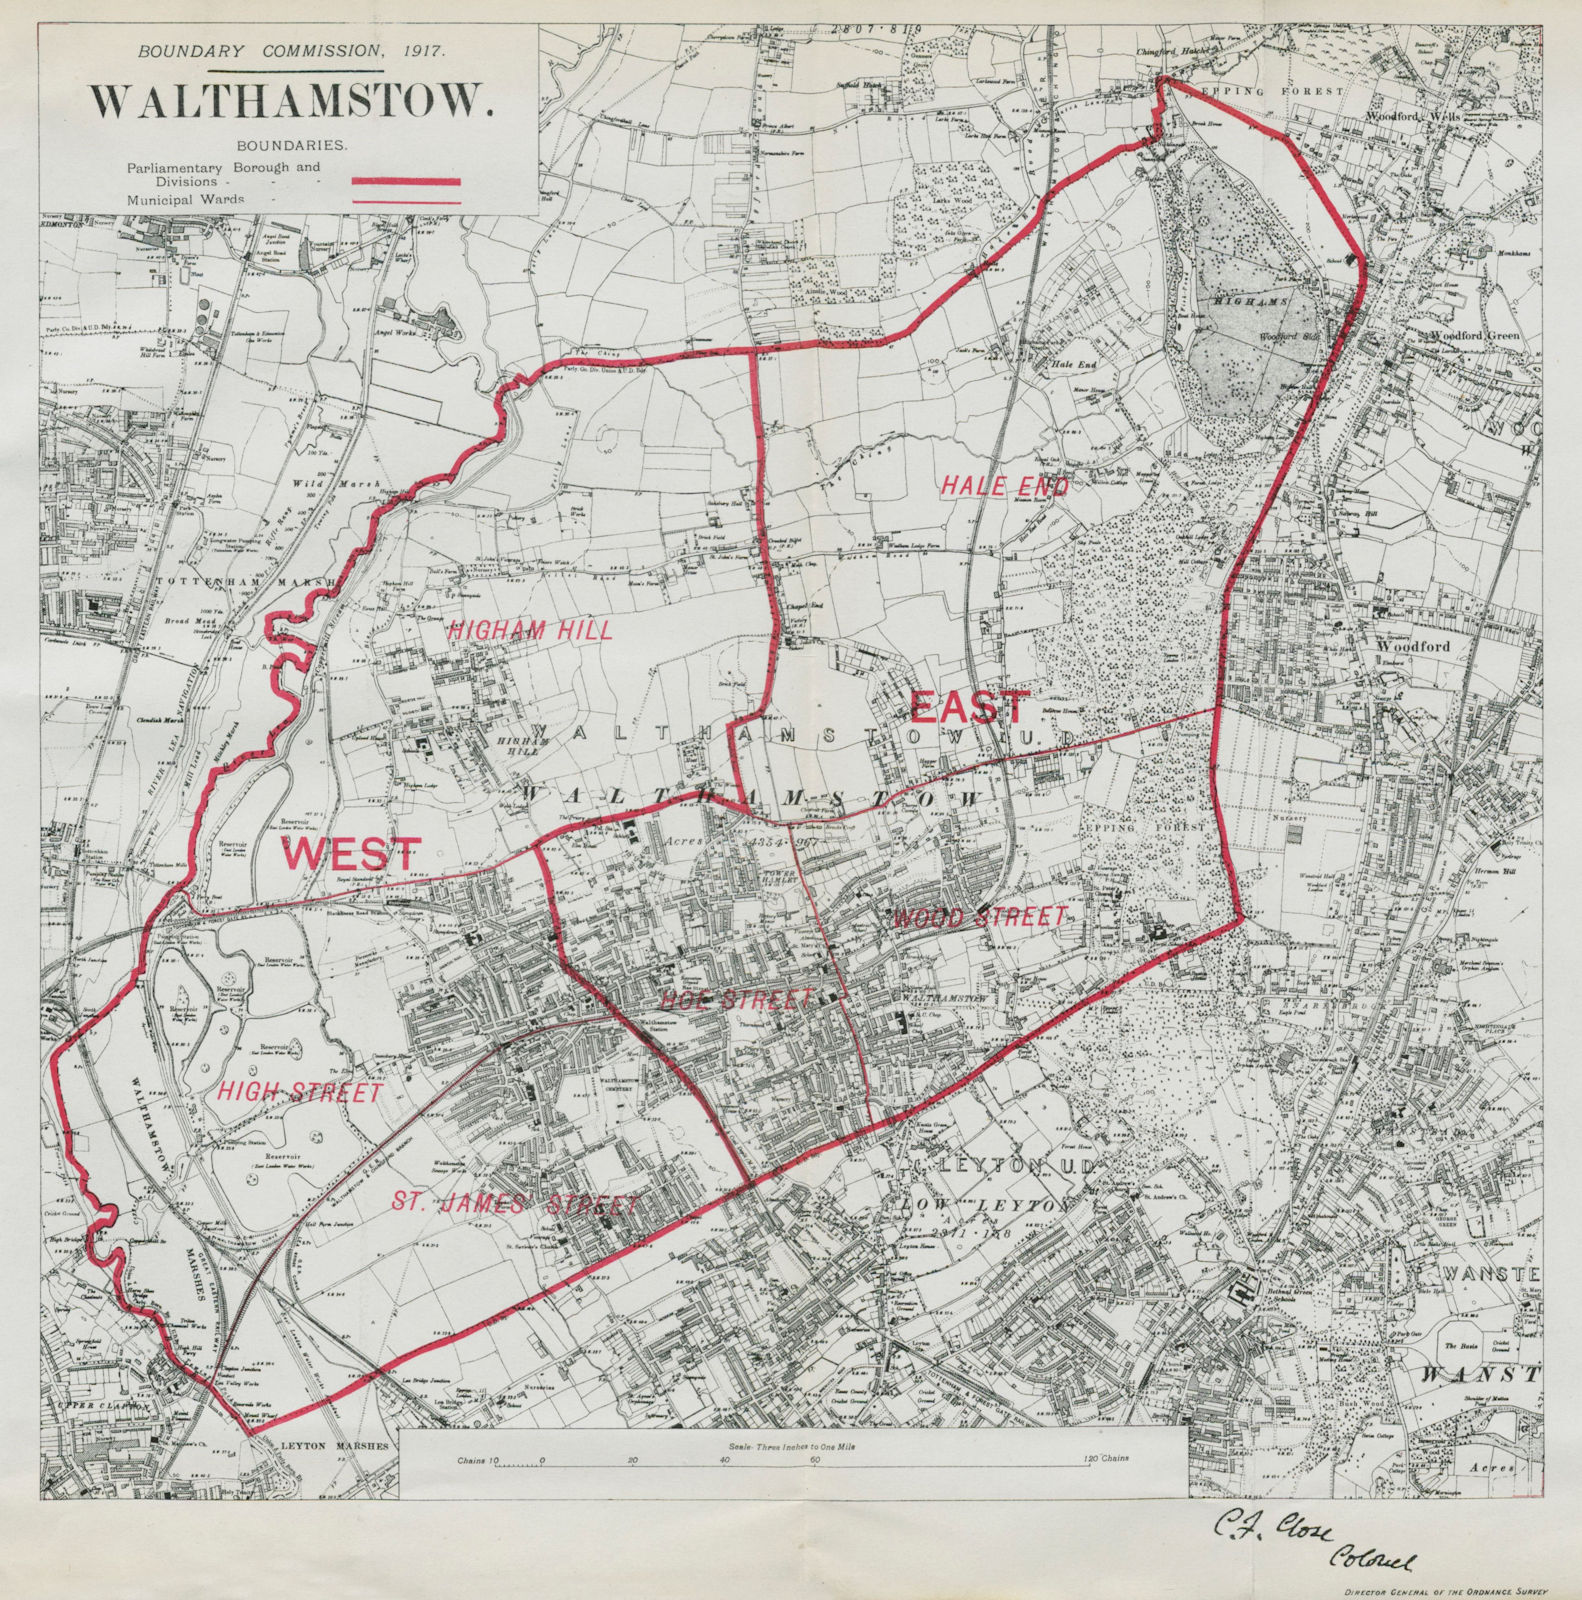 Walthamstow Parliamentary Borough. London. BOUNDARY COMMISSION. Close 1917 map